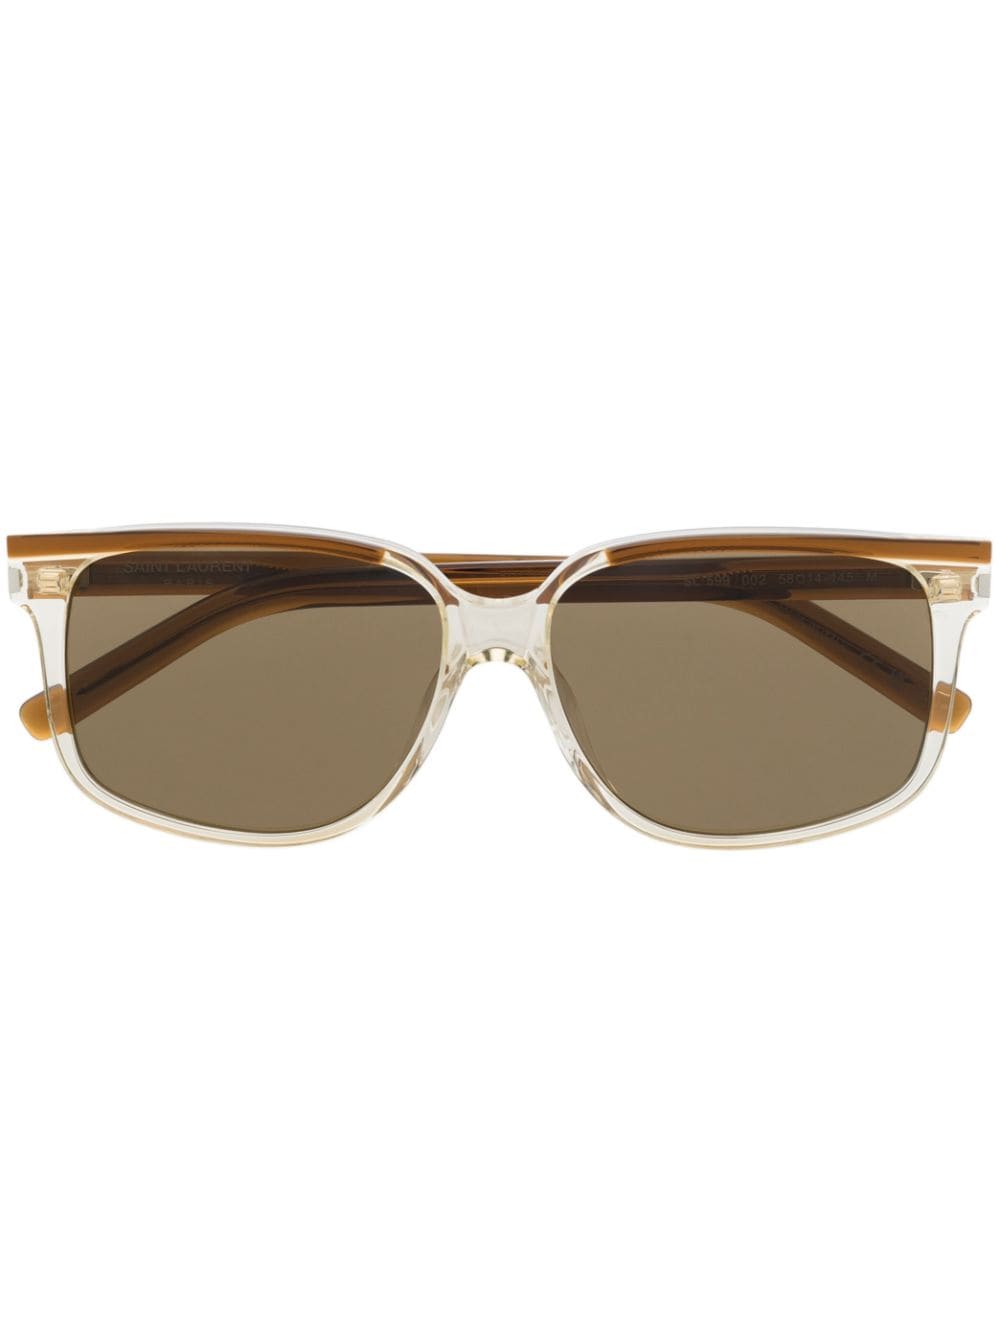 Saint Laurent Eyewear SL 599 square-frame sunglasses - Brown von Saint Laurent Eyewear